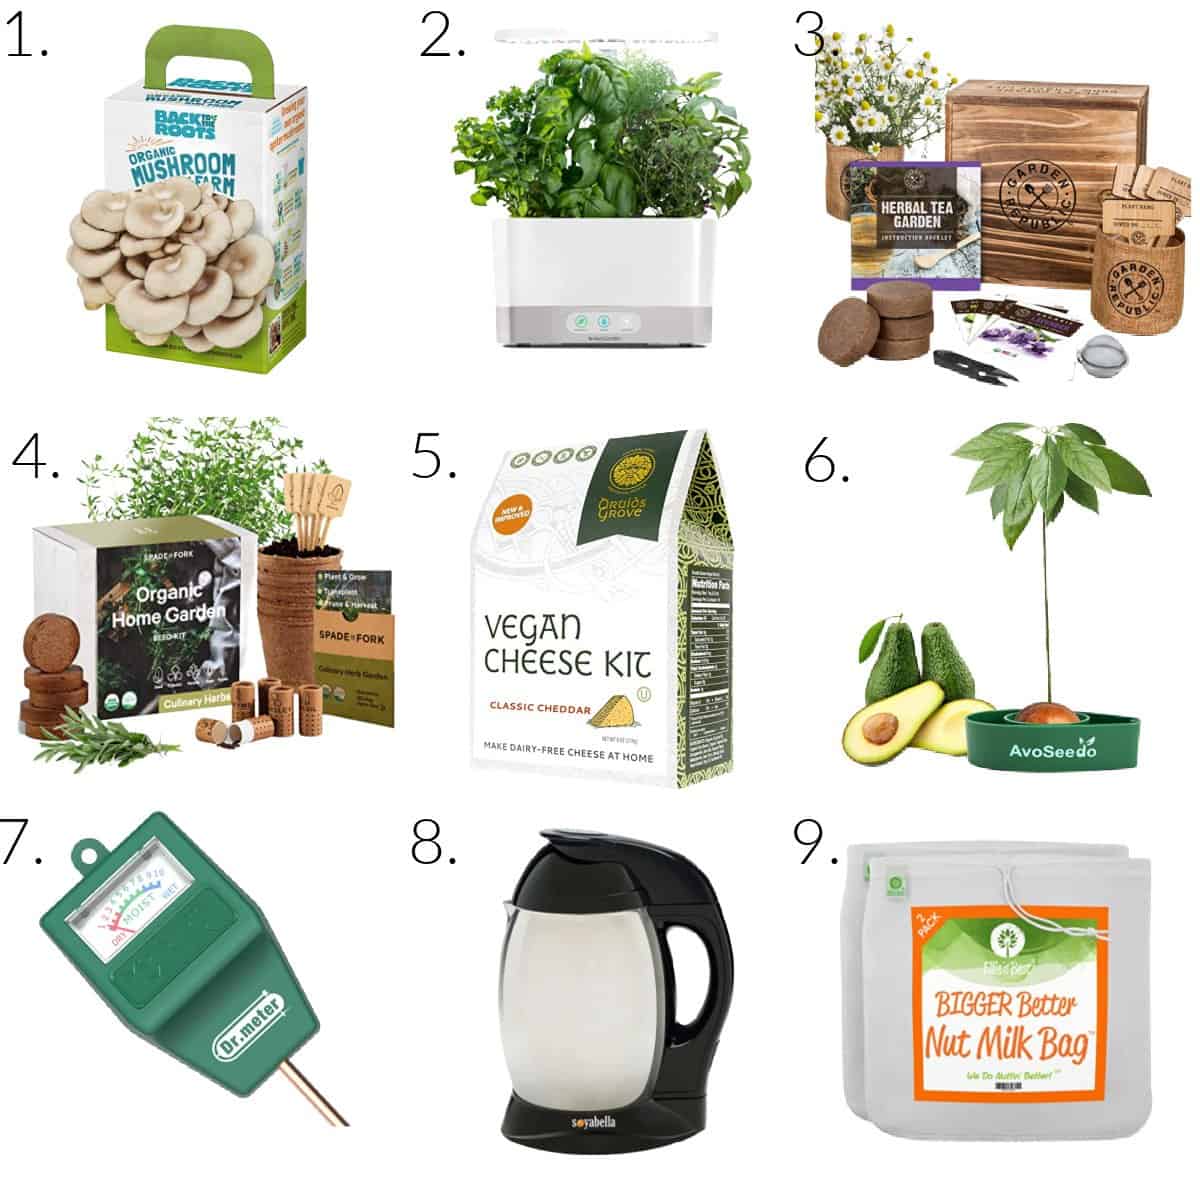 photos collage showing 9 vegan gift ideas